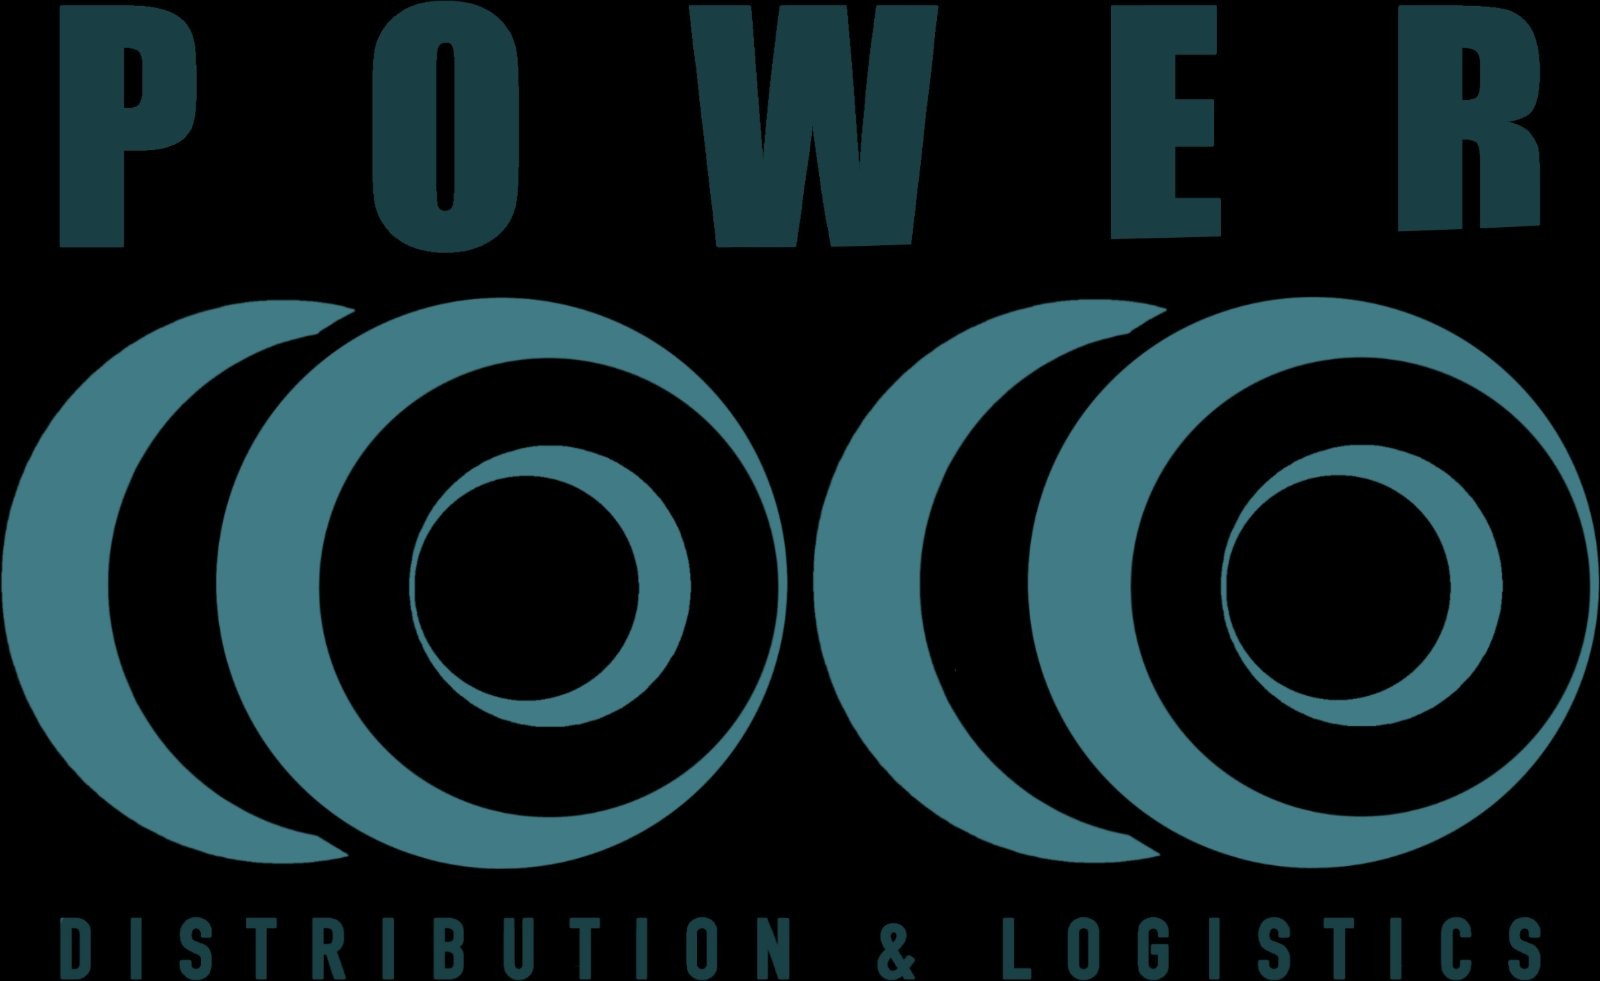 Power CoCo Distribution and Logistics Co.,Ltd.